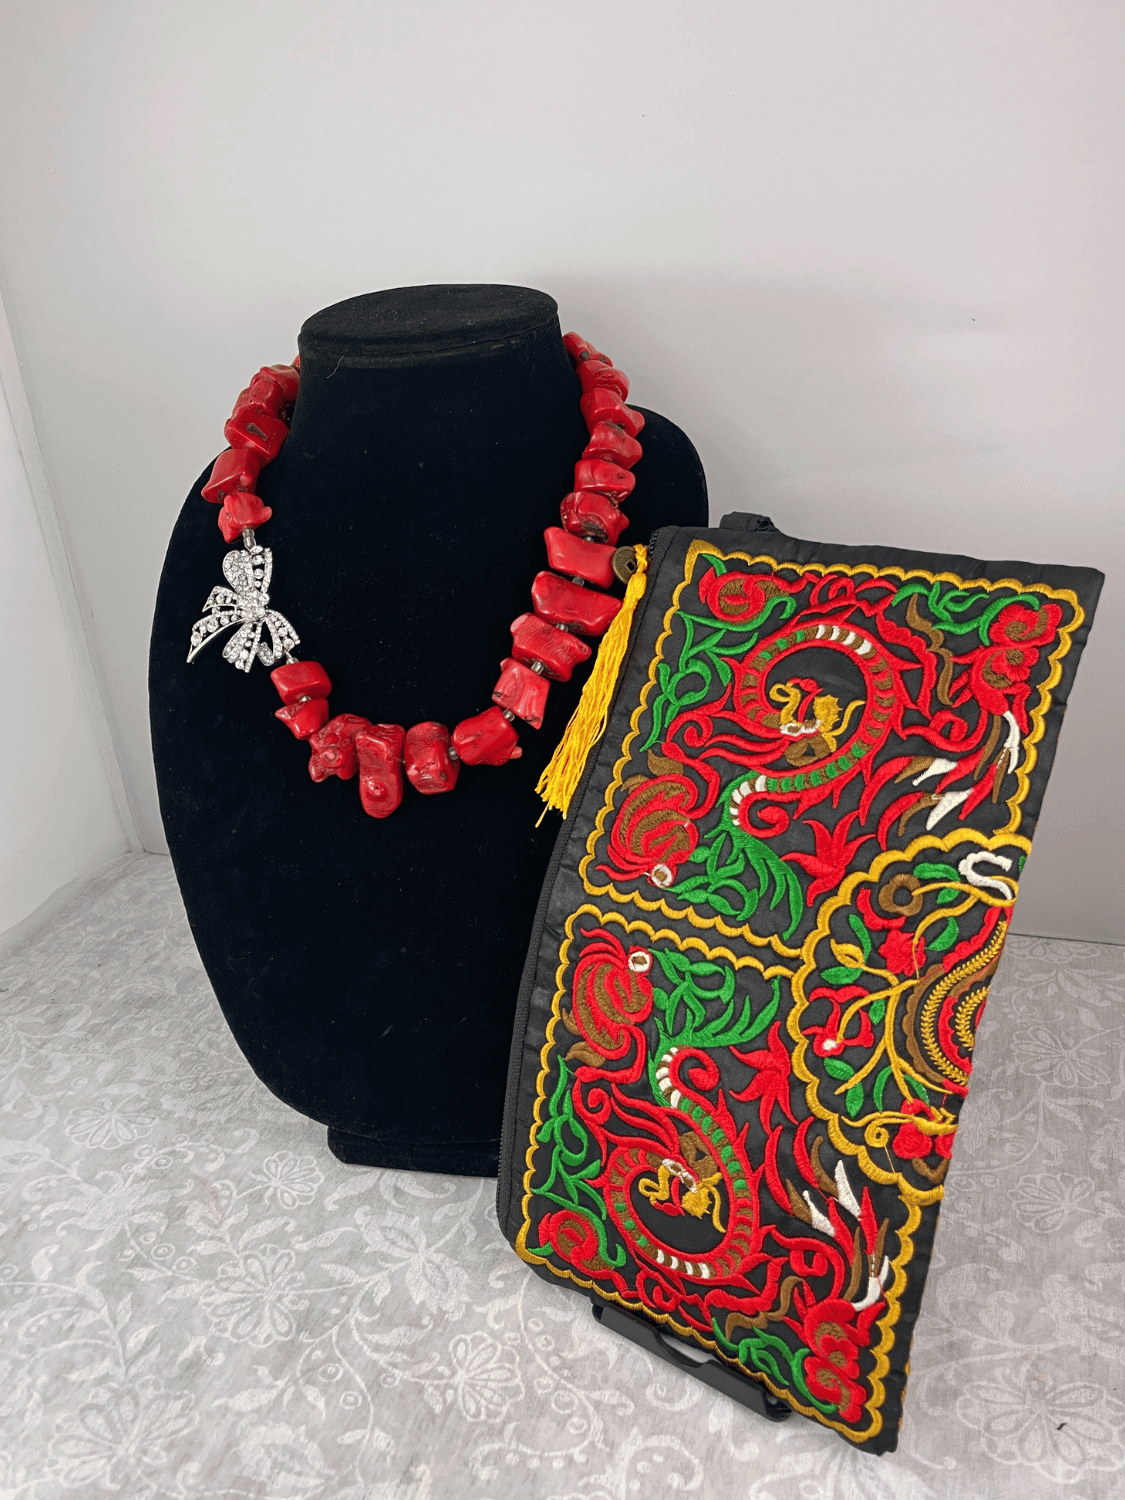 Flower Statement Necklace, Women's Jewelry, Floral, 3D, Multicolor, Necklace  | eBay